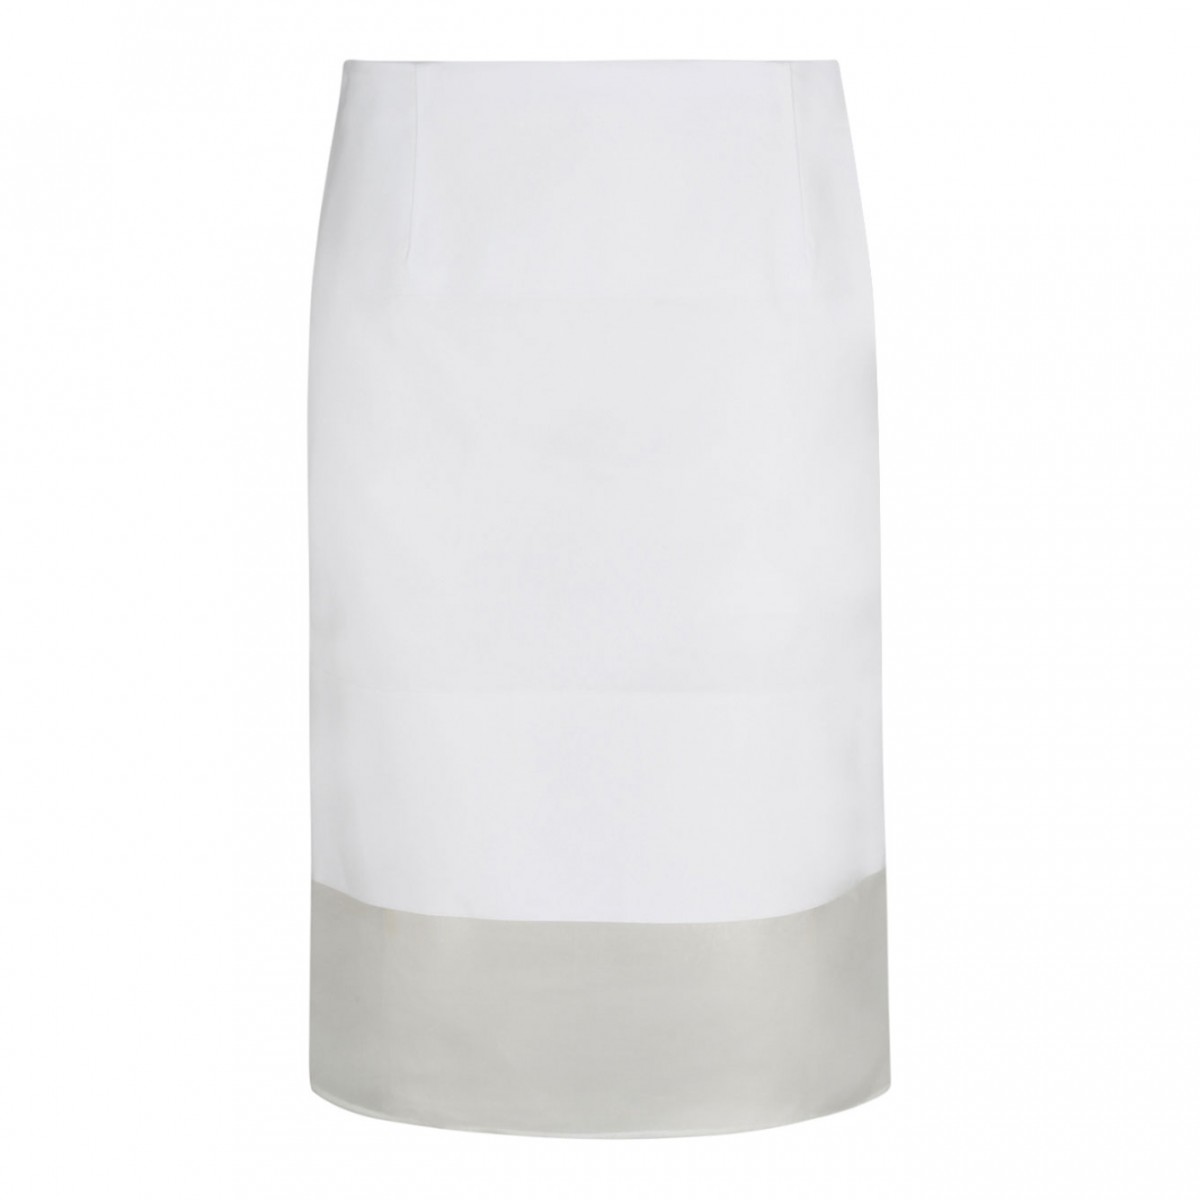 White Low Rise Skirt